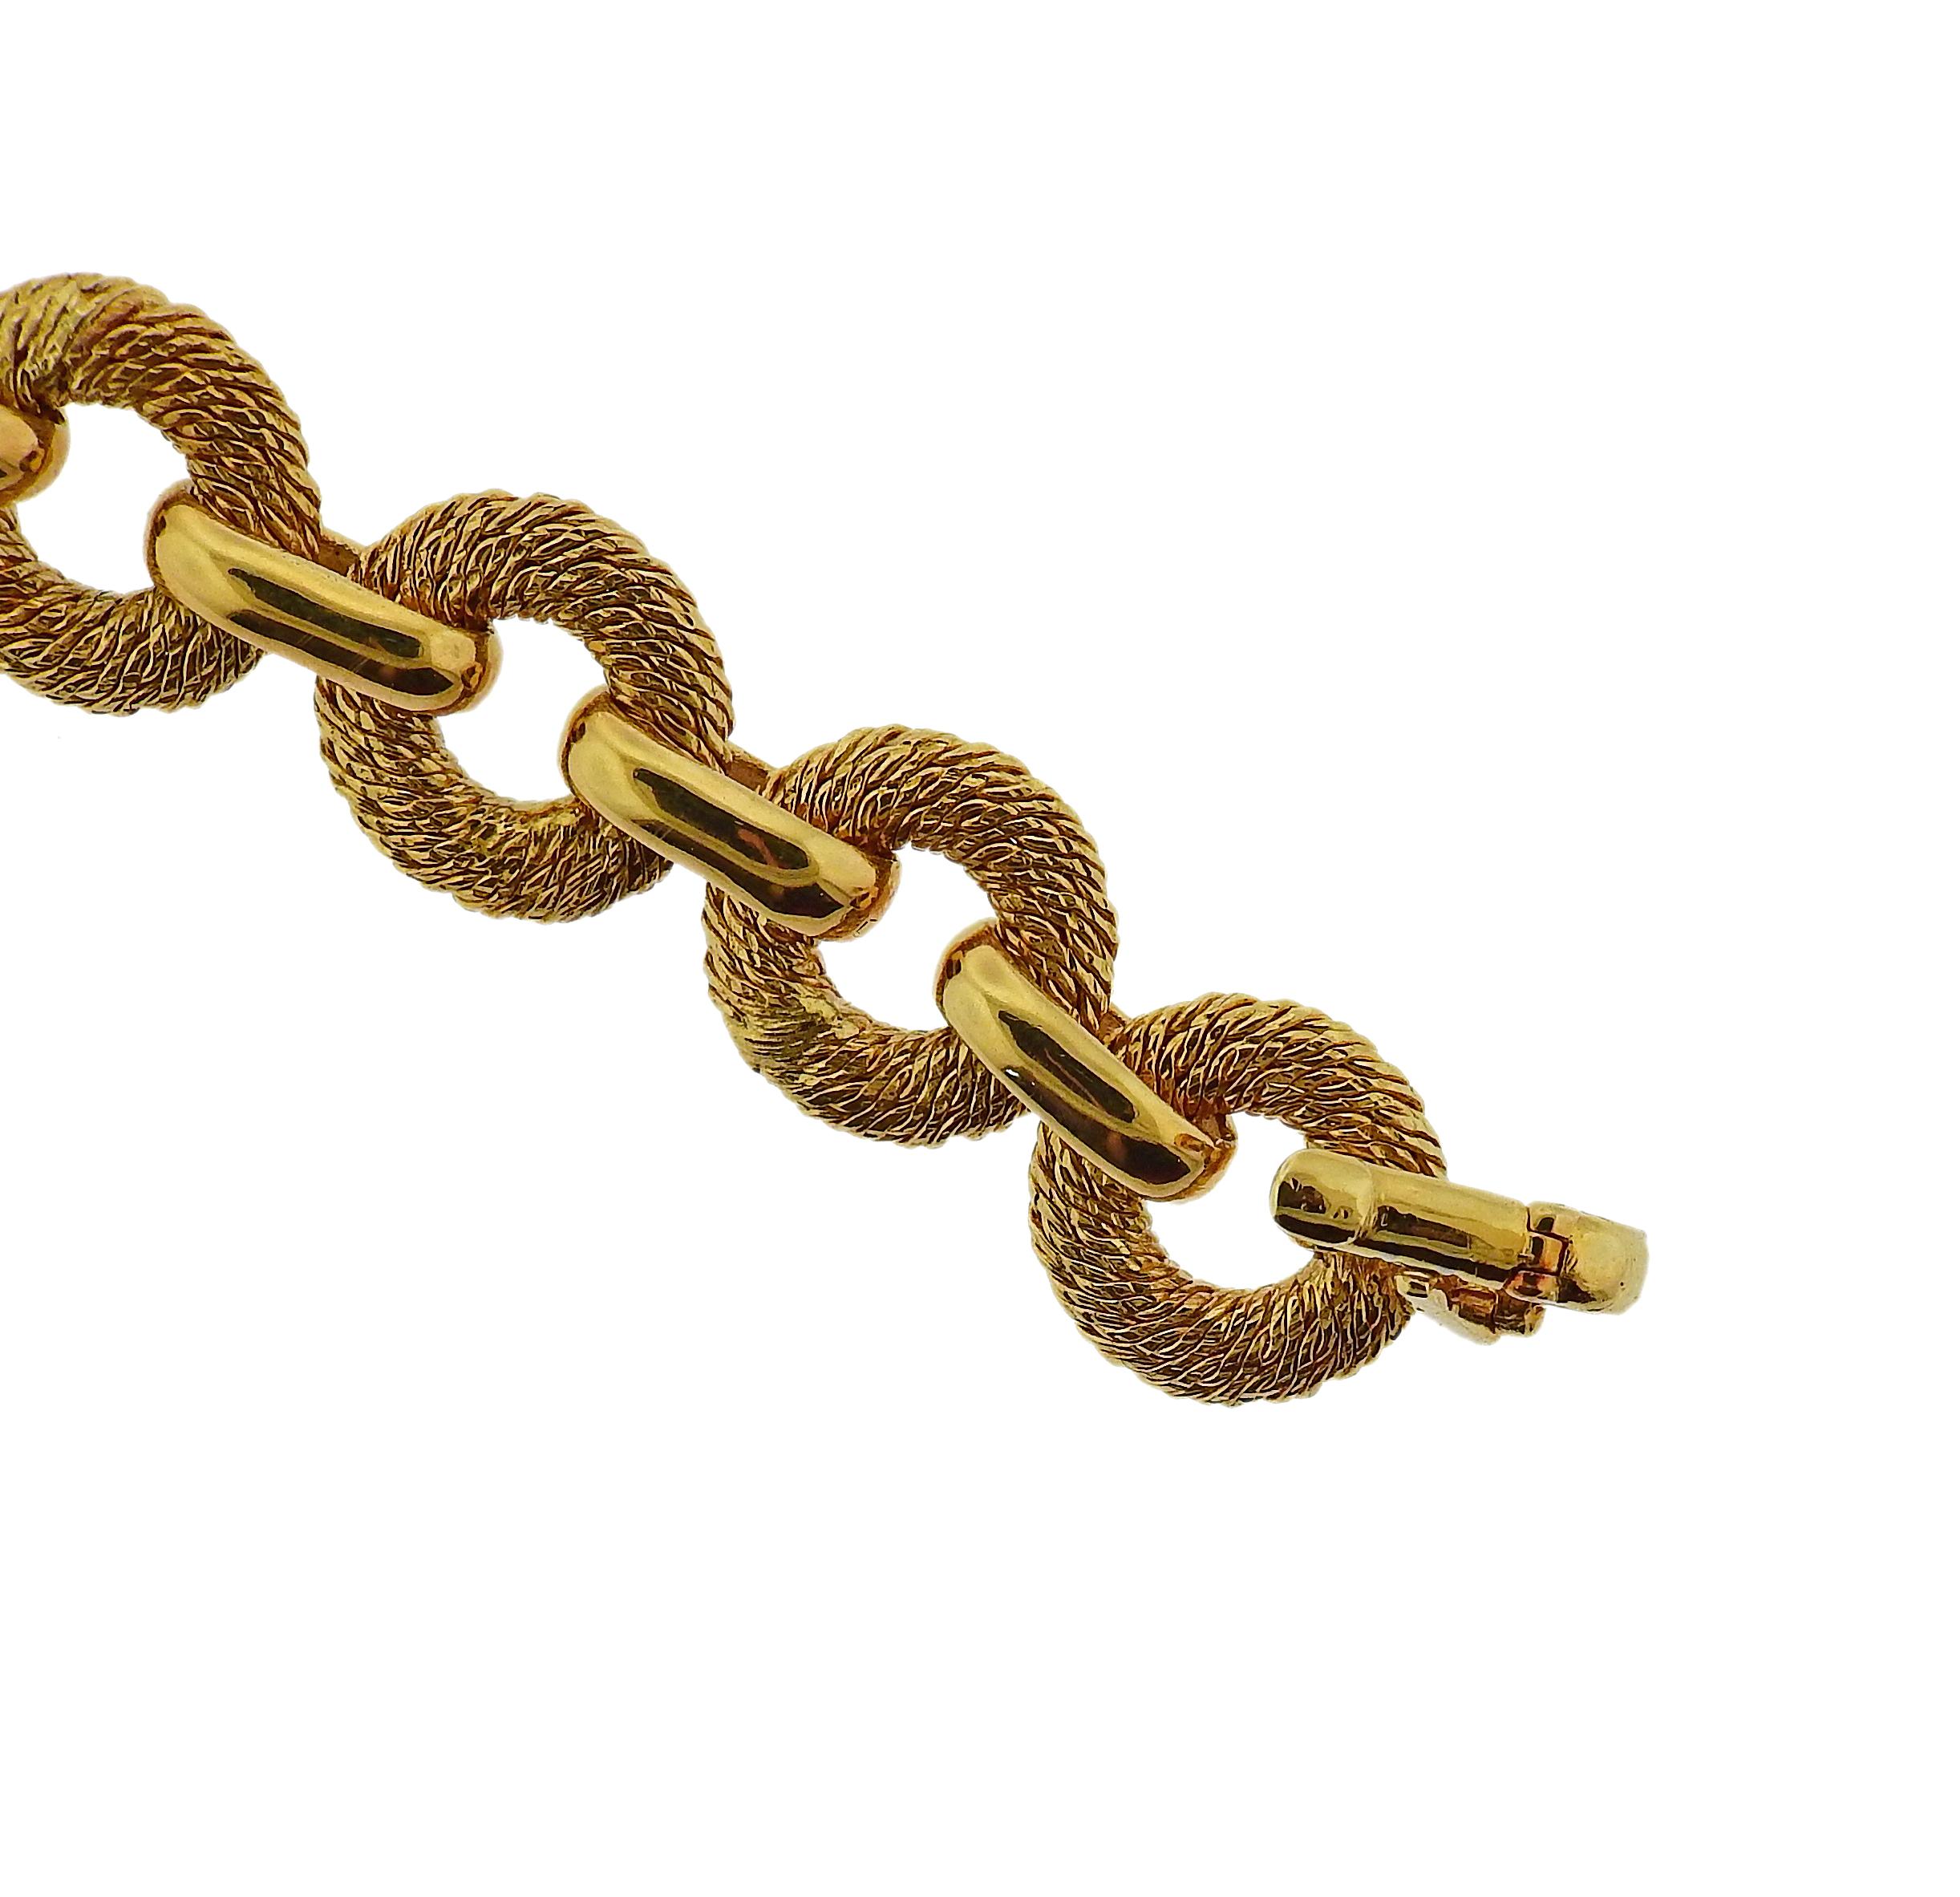 Exquisite 18k gold circle link bracelet, designed by George L'enfant for Fred Paris, in circa 1970s. Comes with original box. Bracelet is 7.25